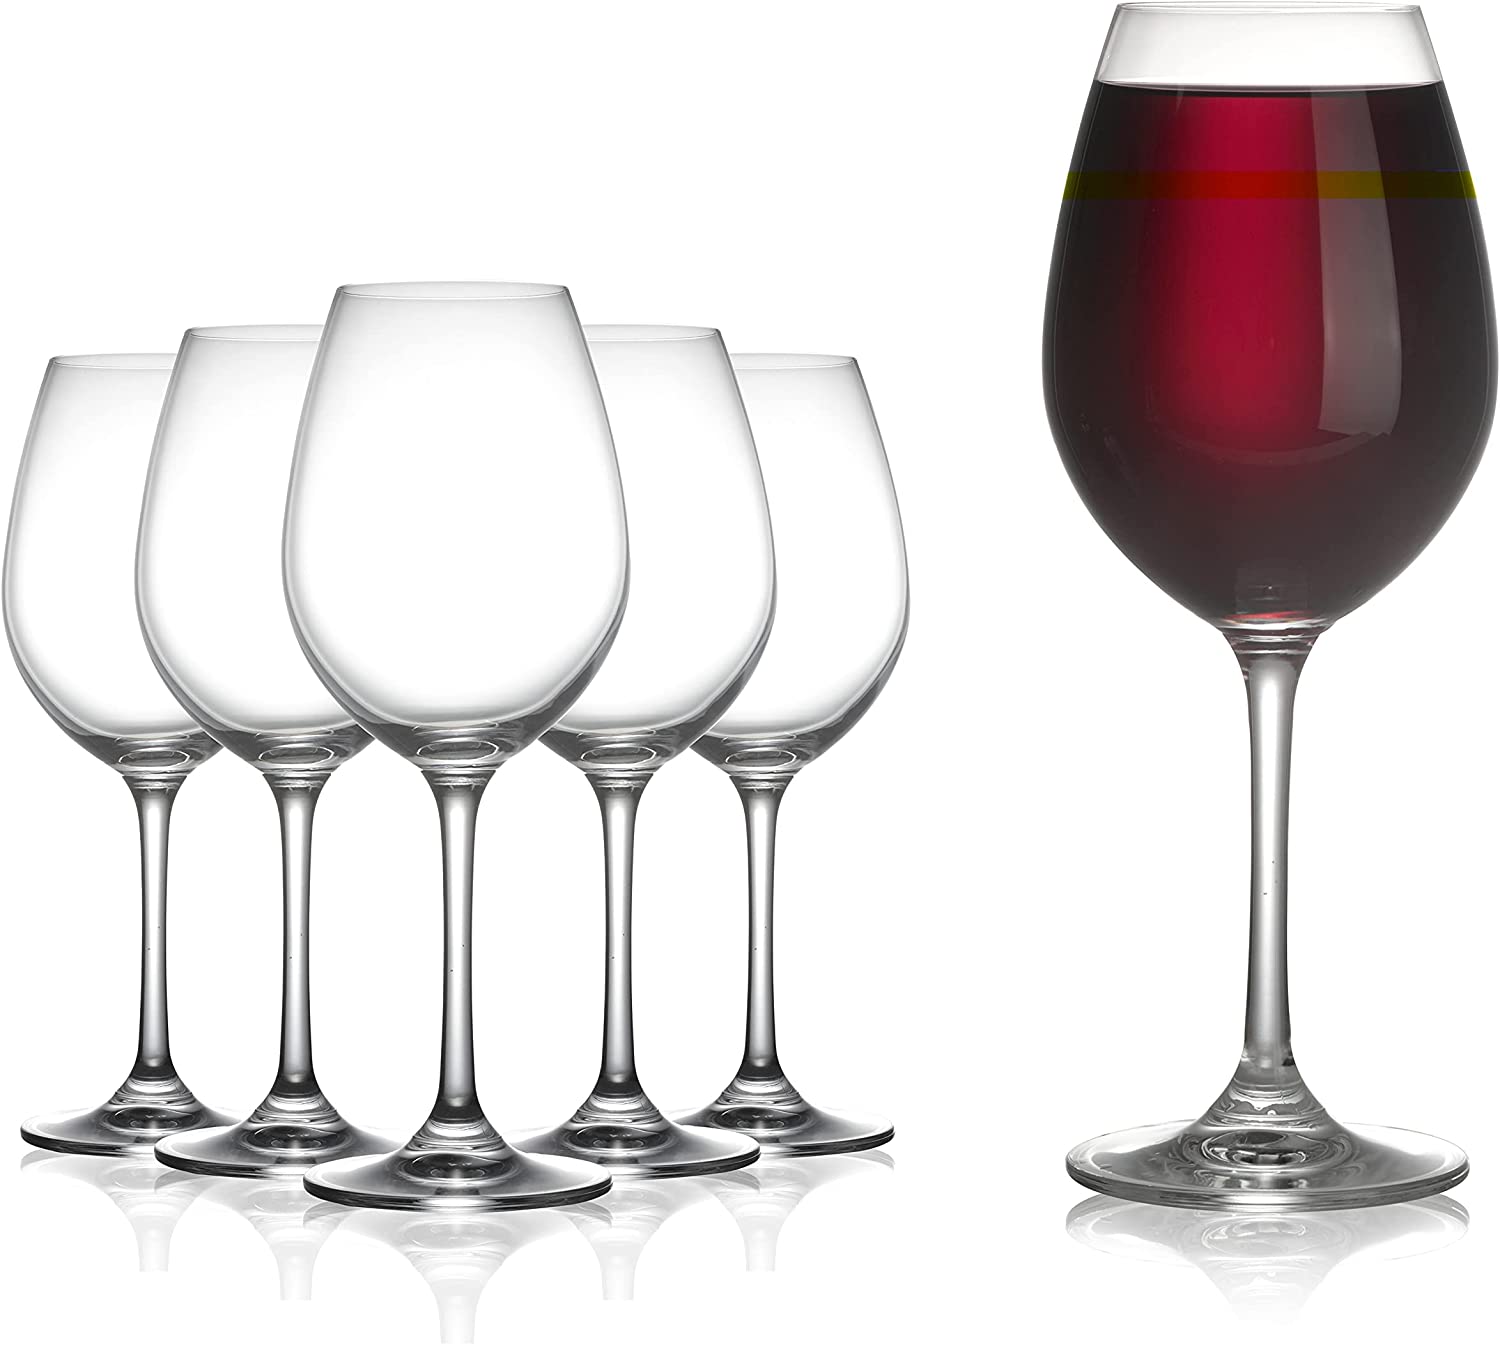  VERONLY Stemware Storage Cases - Holds 24 Wine Glass